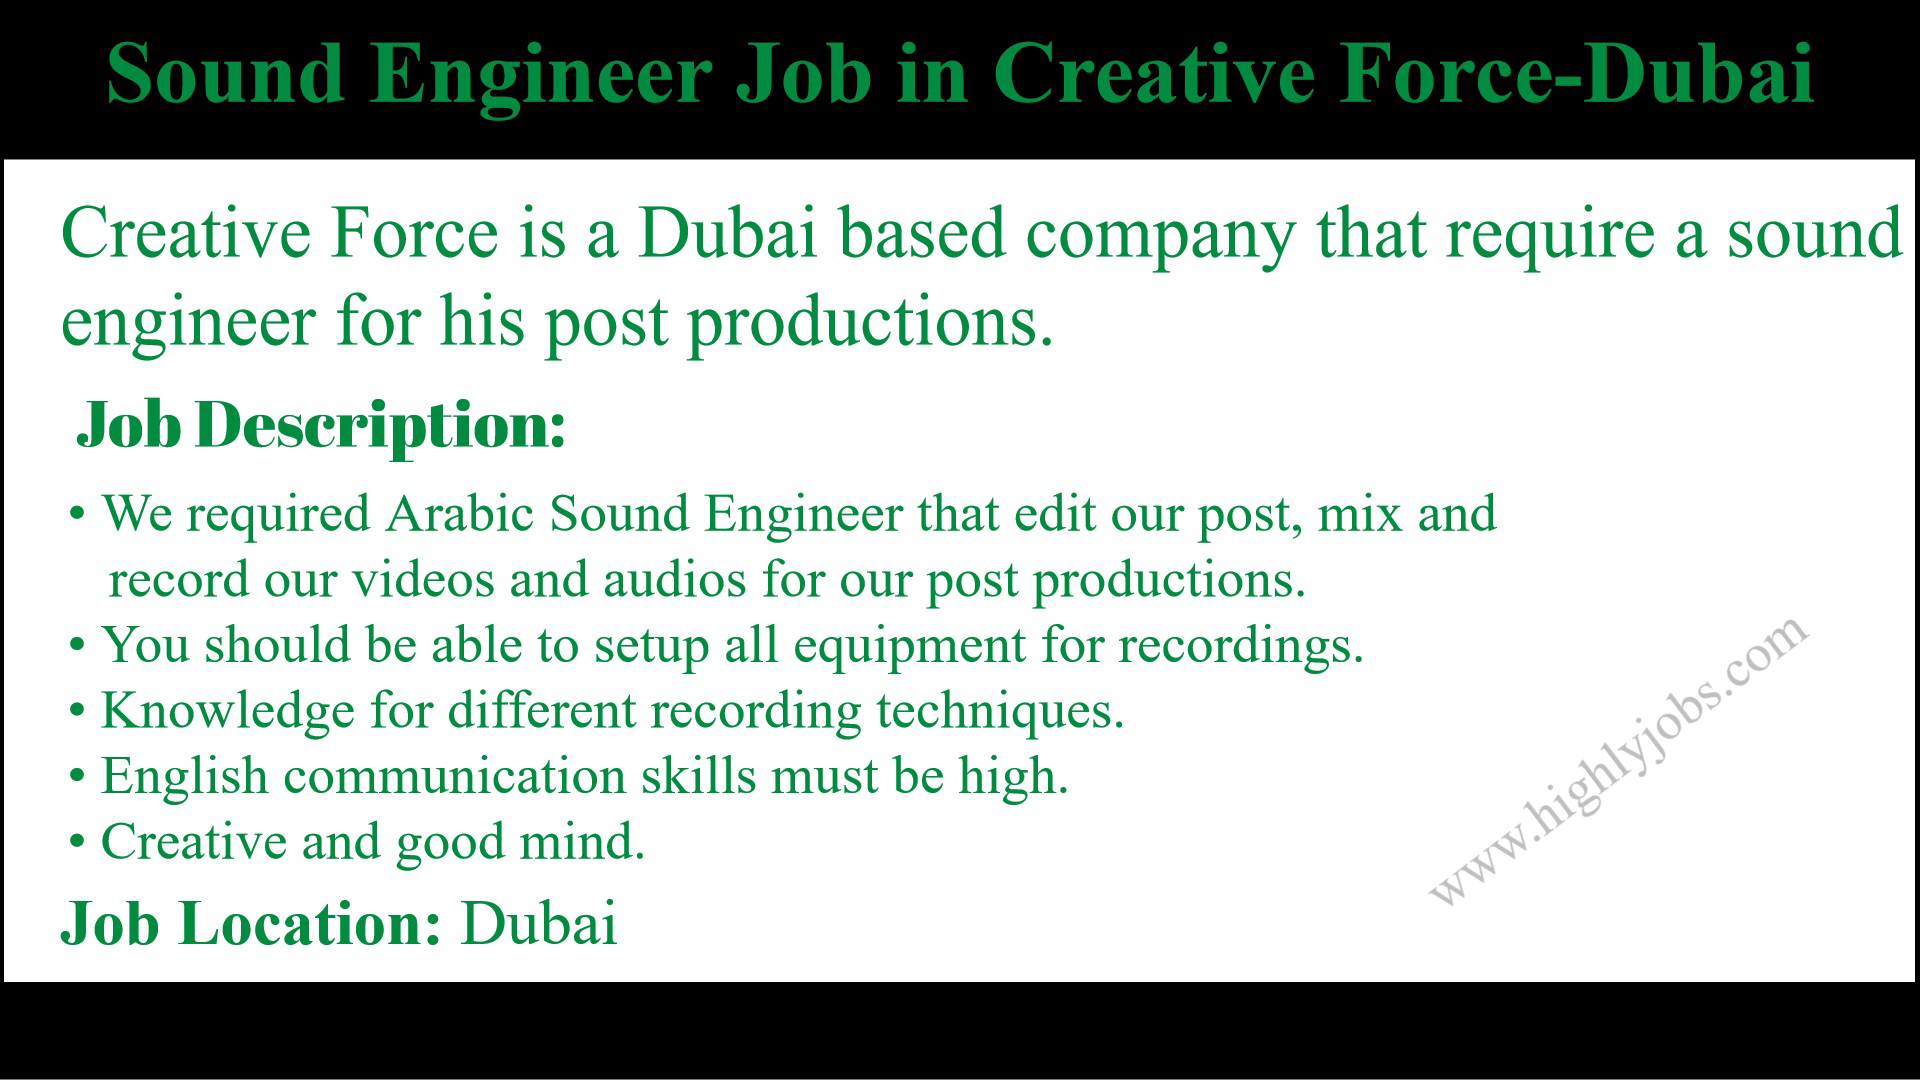 Sound Engineer Job in Creative Force-Dubai